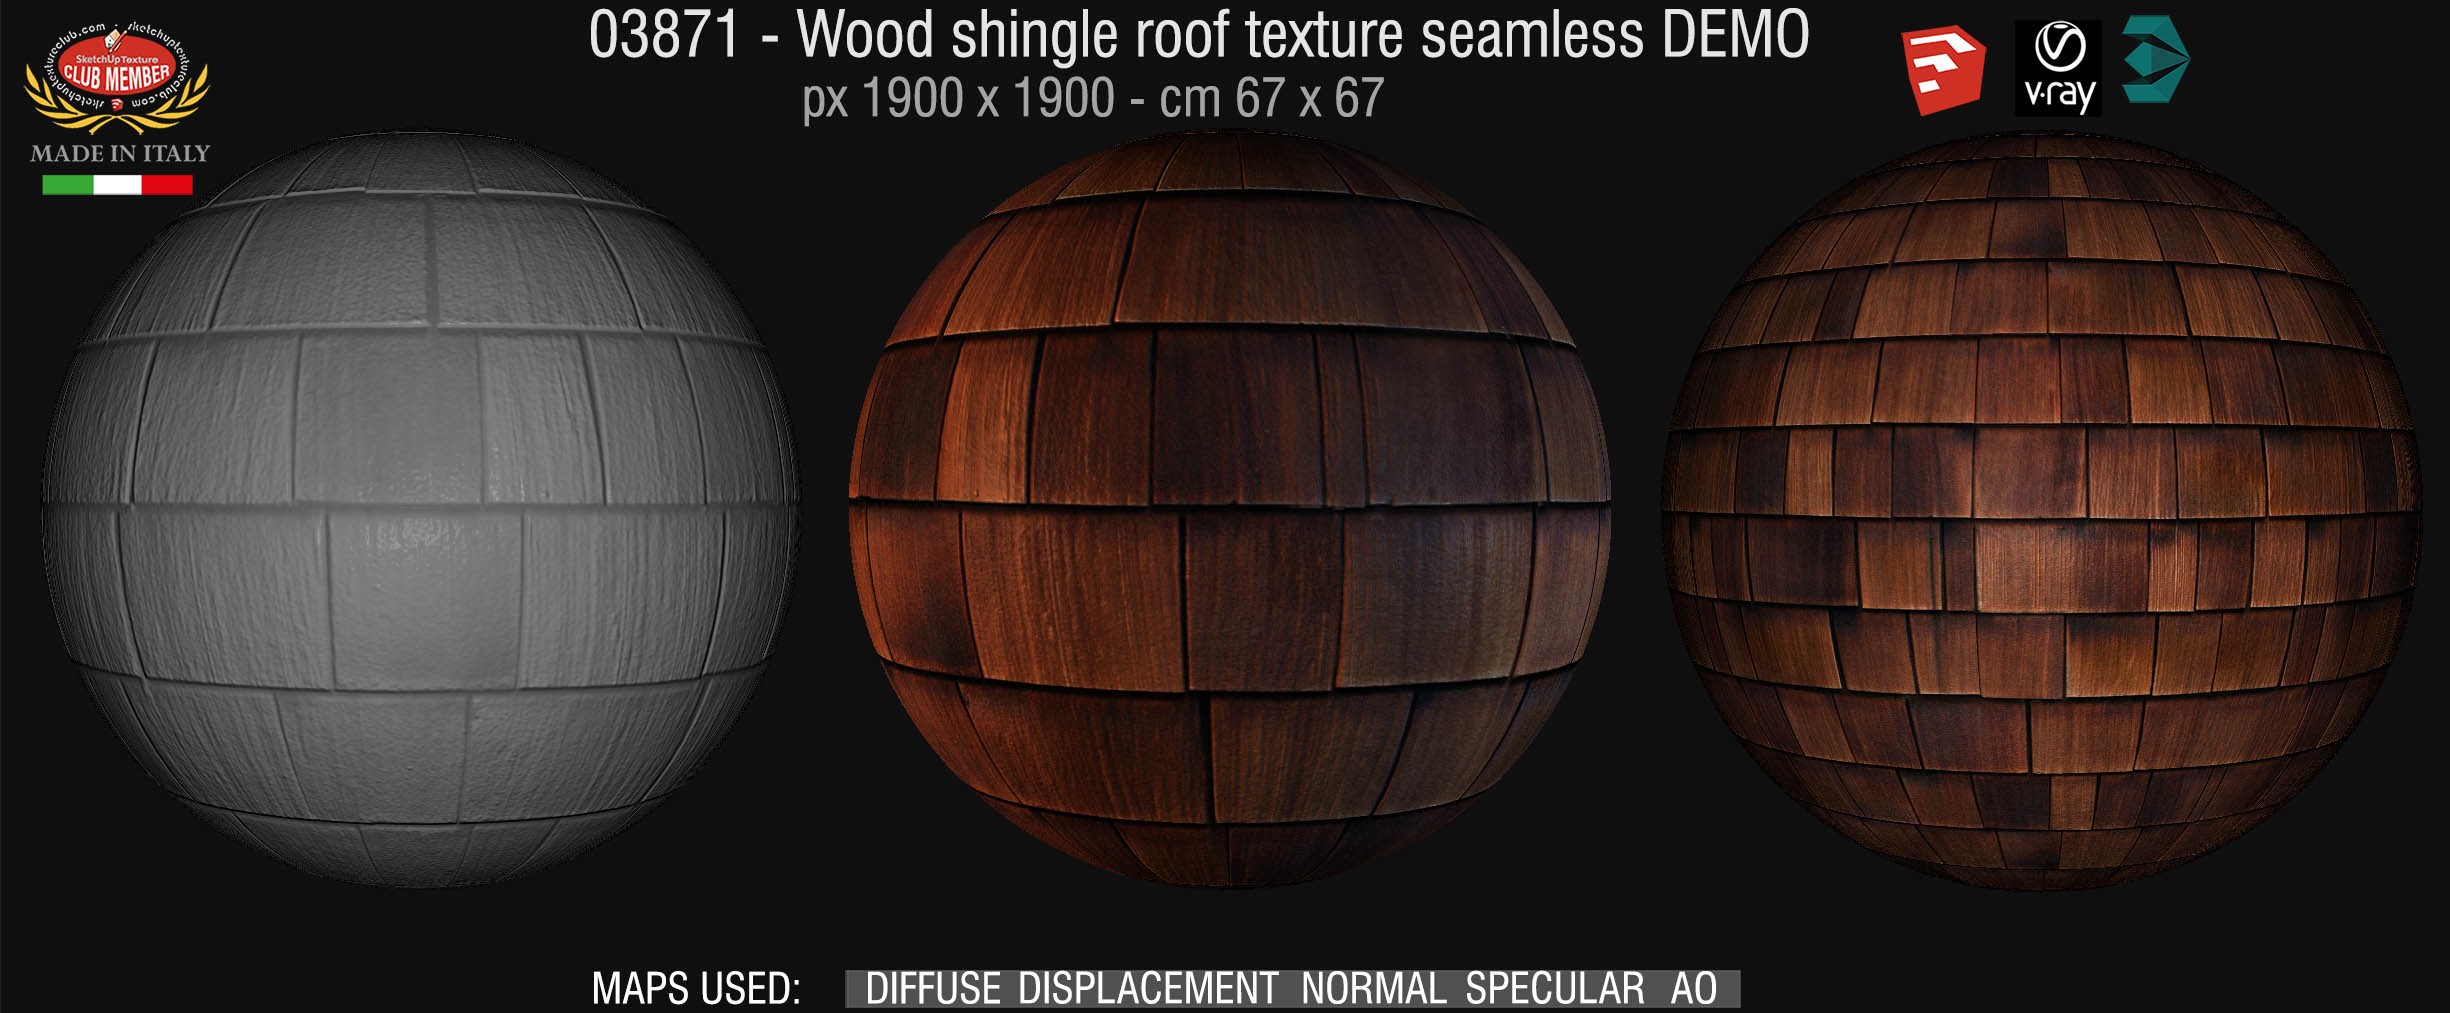 03871 Wood shingle roof texture seamless + maps DEMO